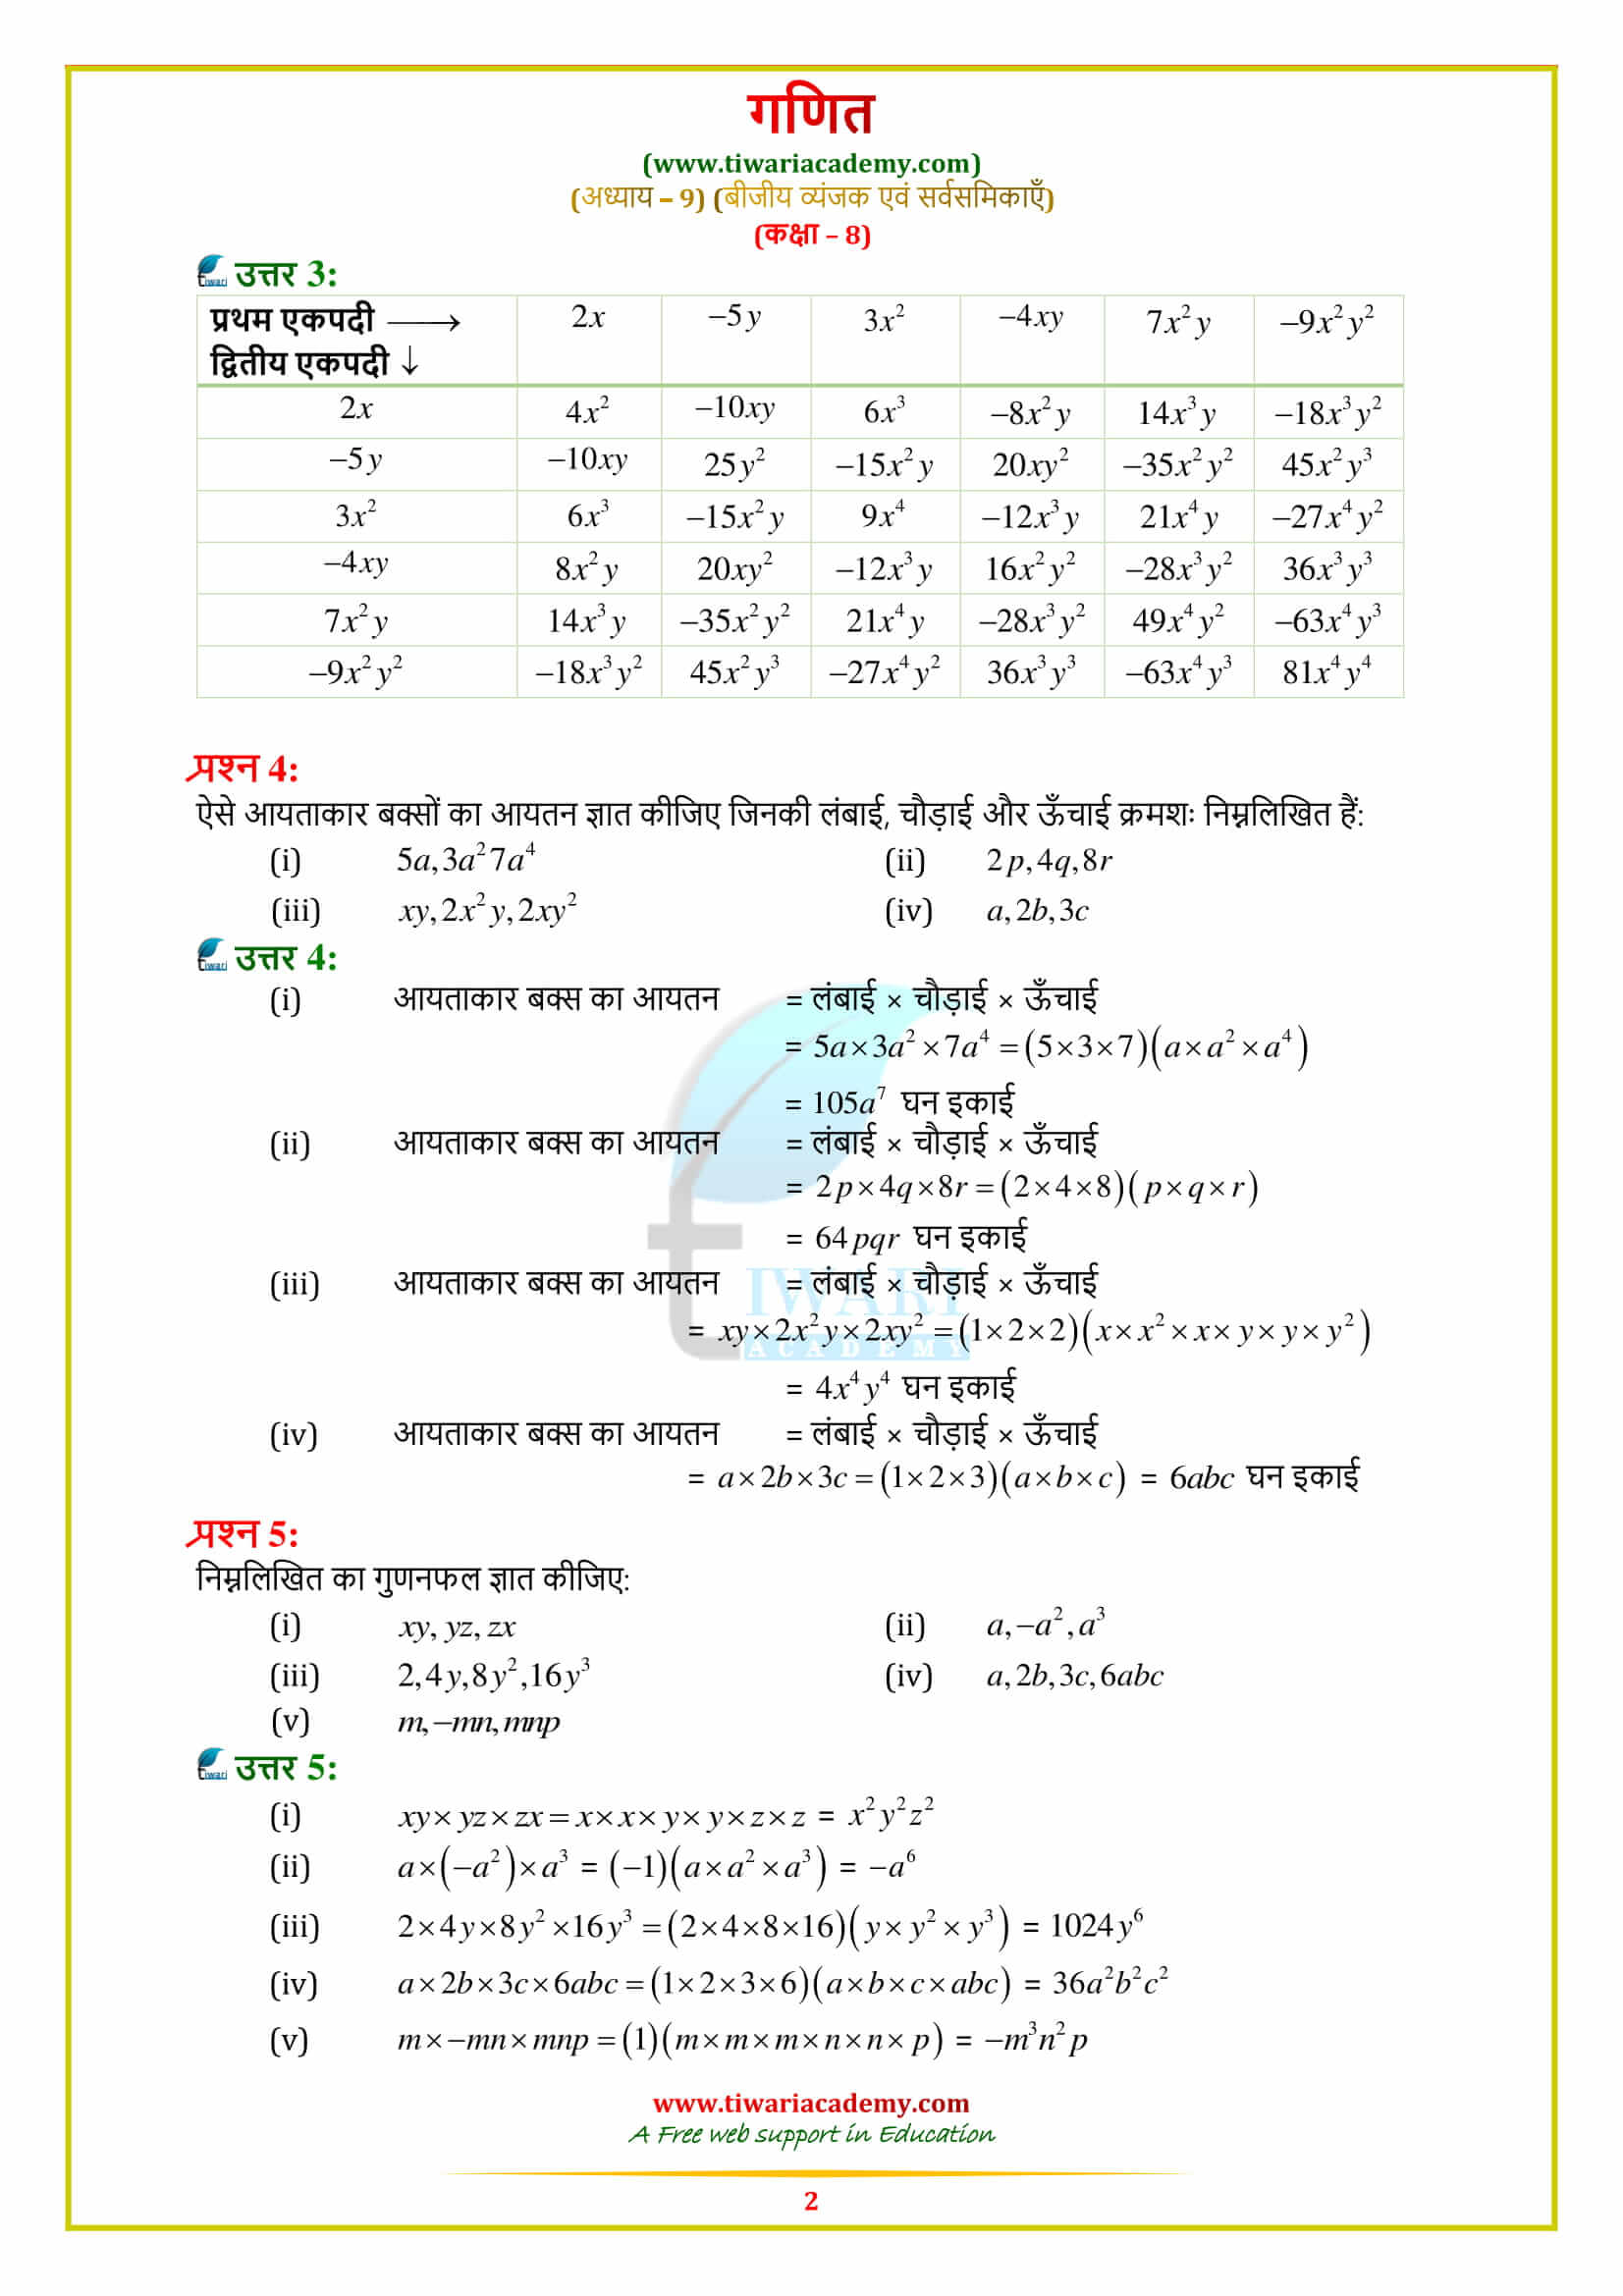 8 Maths Exercise 9.2 Solutions in hindi medium pdf free